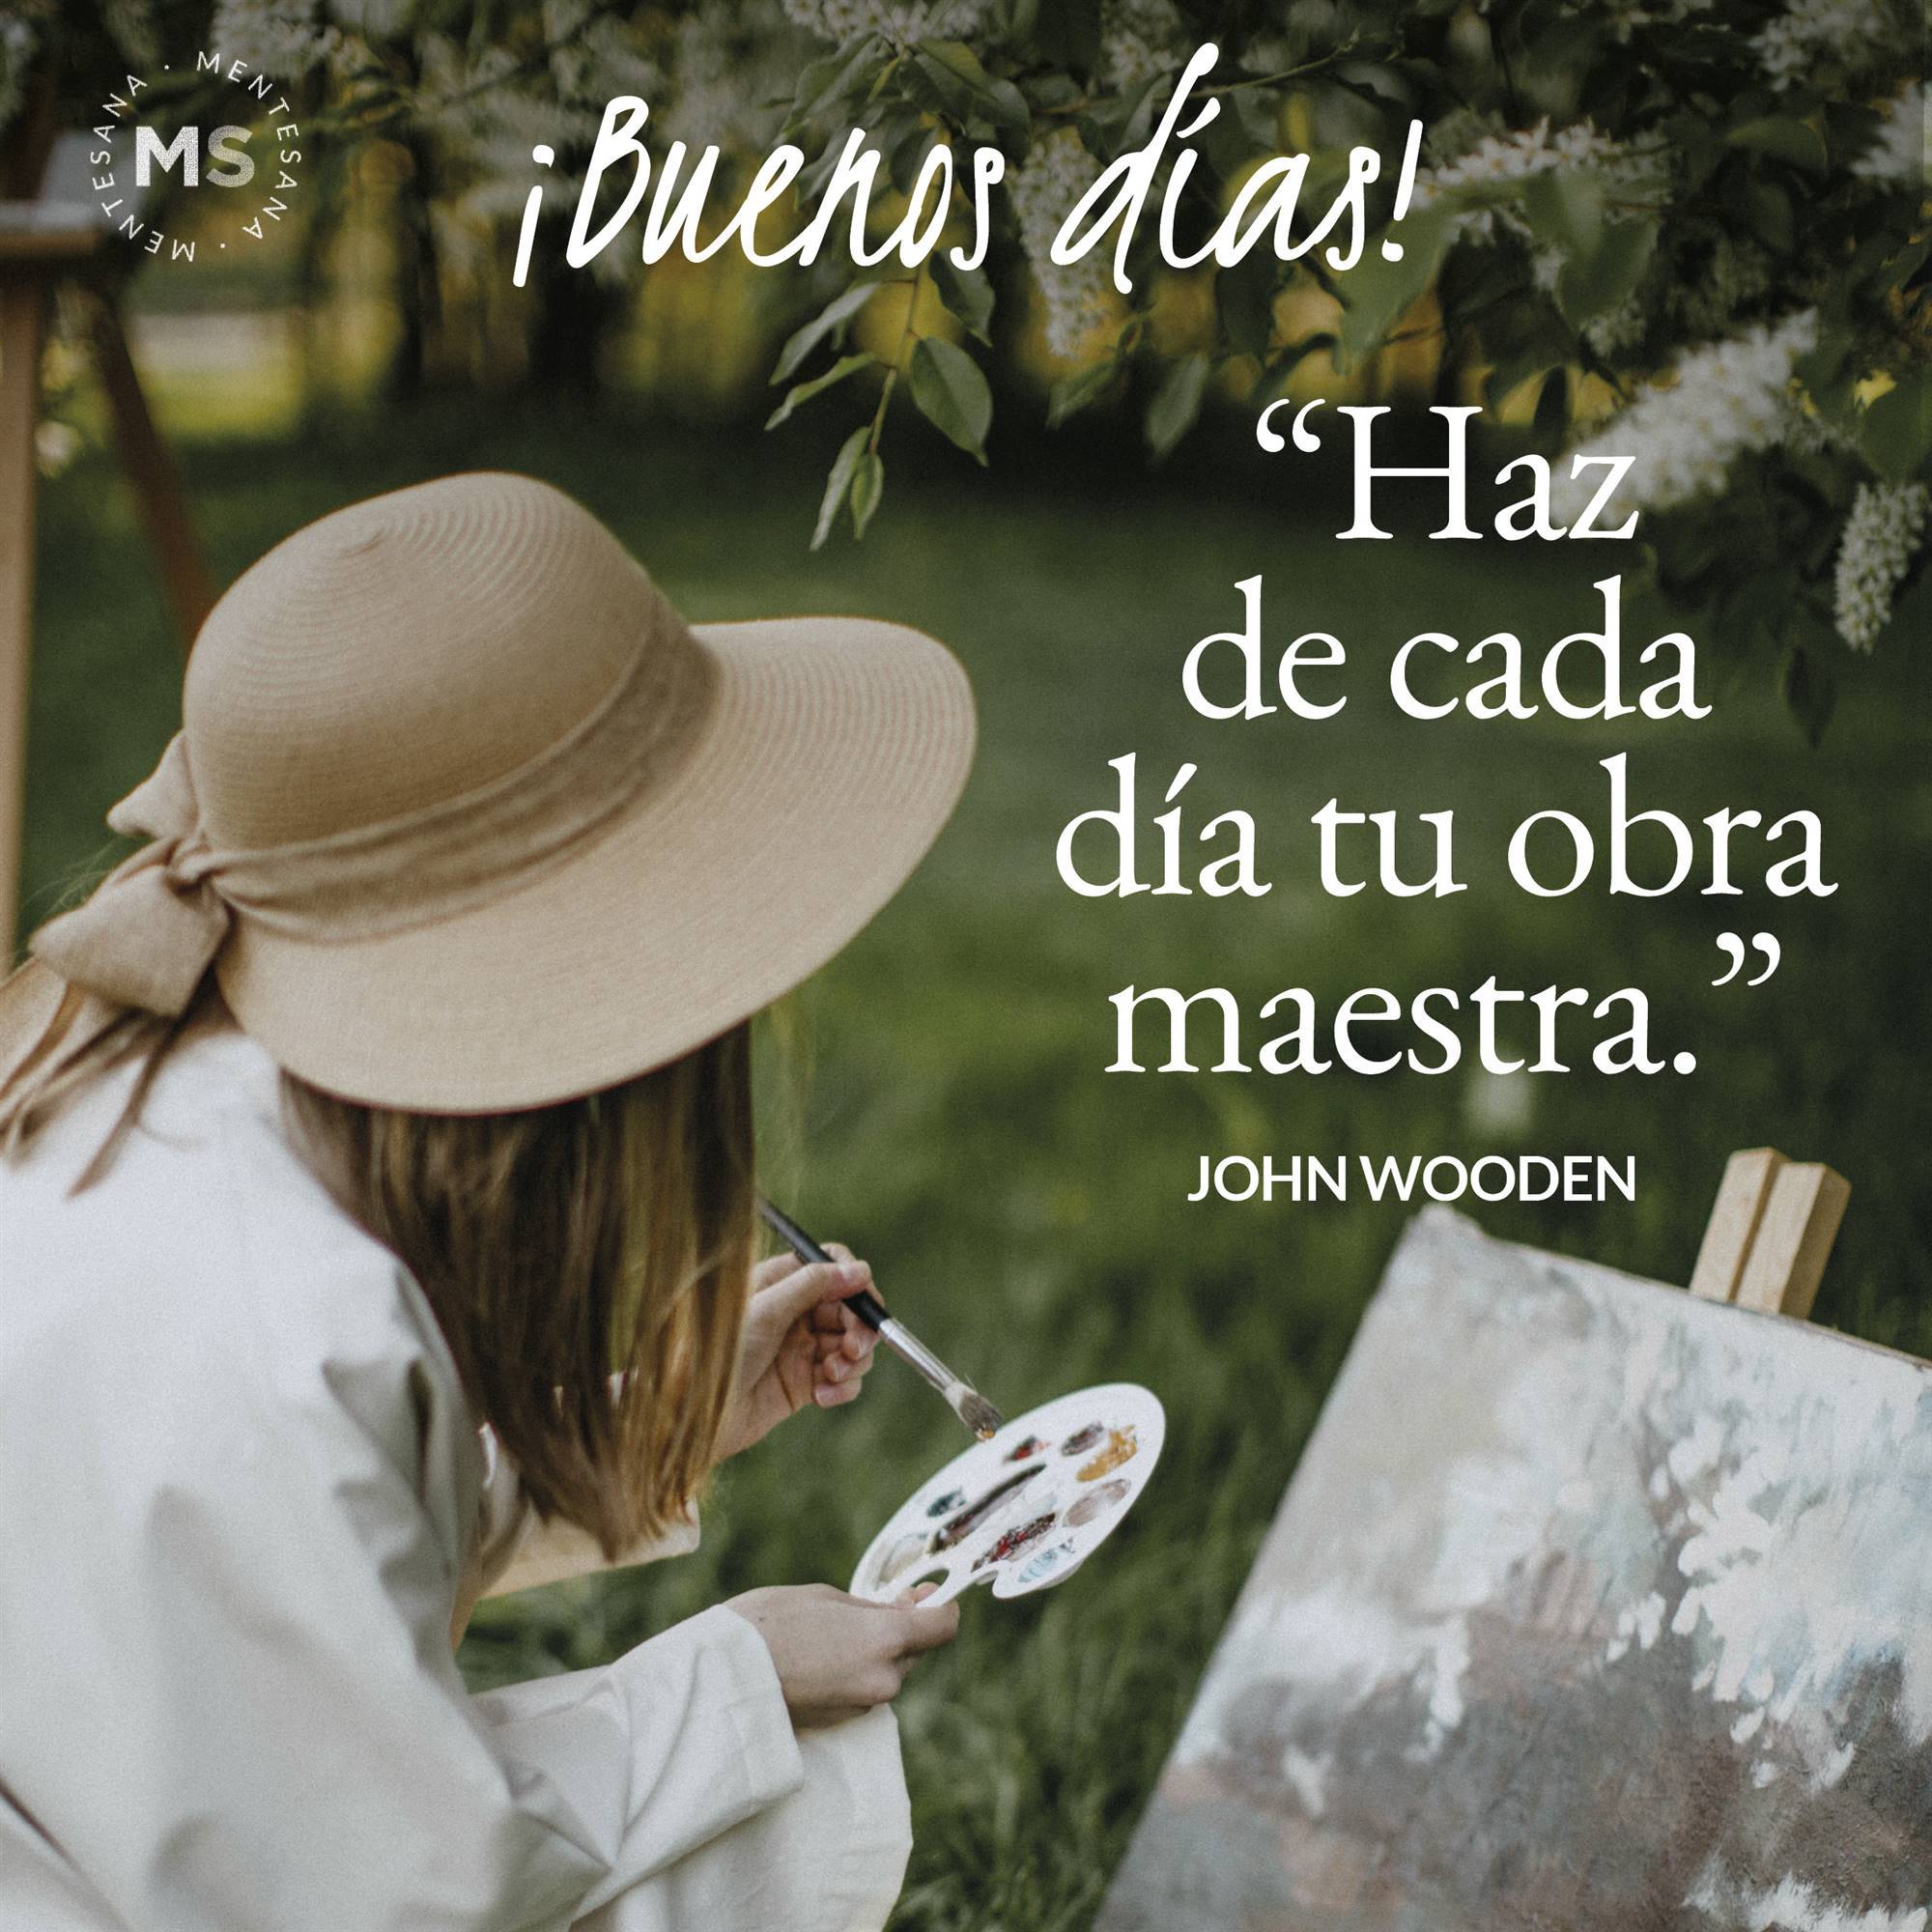 "Haz de cada día tu obra maestra." John Wooden